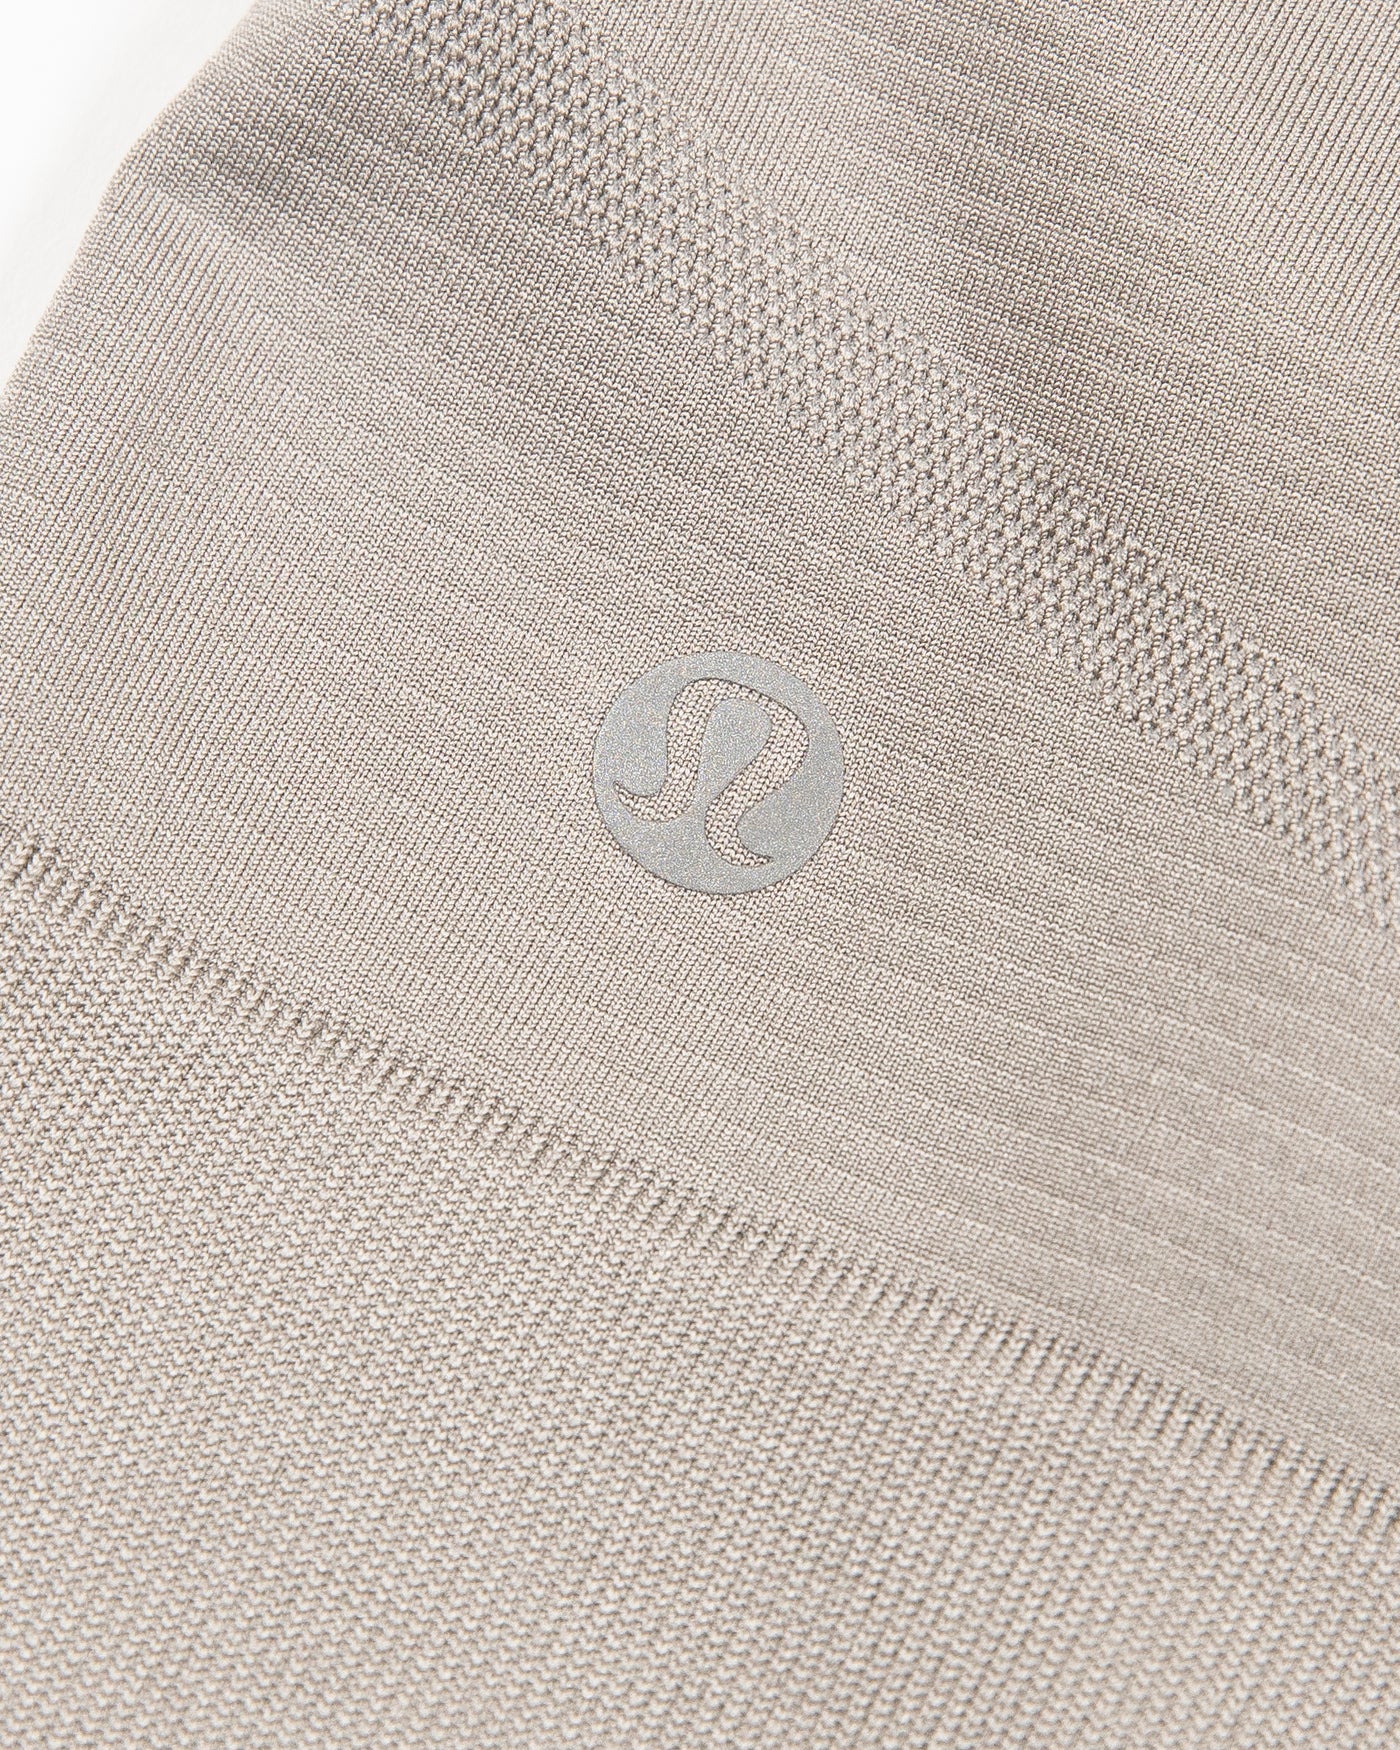 grey lululemon quarter zip with Chicago Blackhawks secondary logo on back - alt detail lay flat